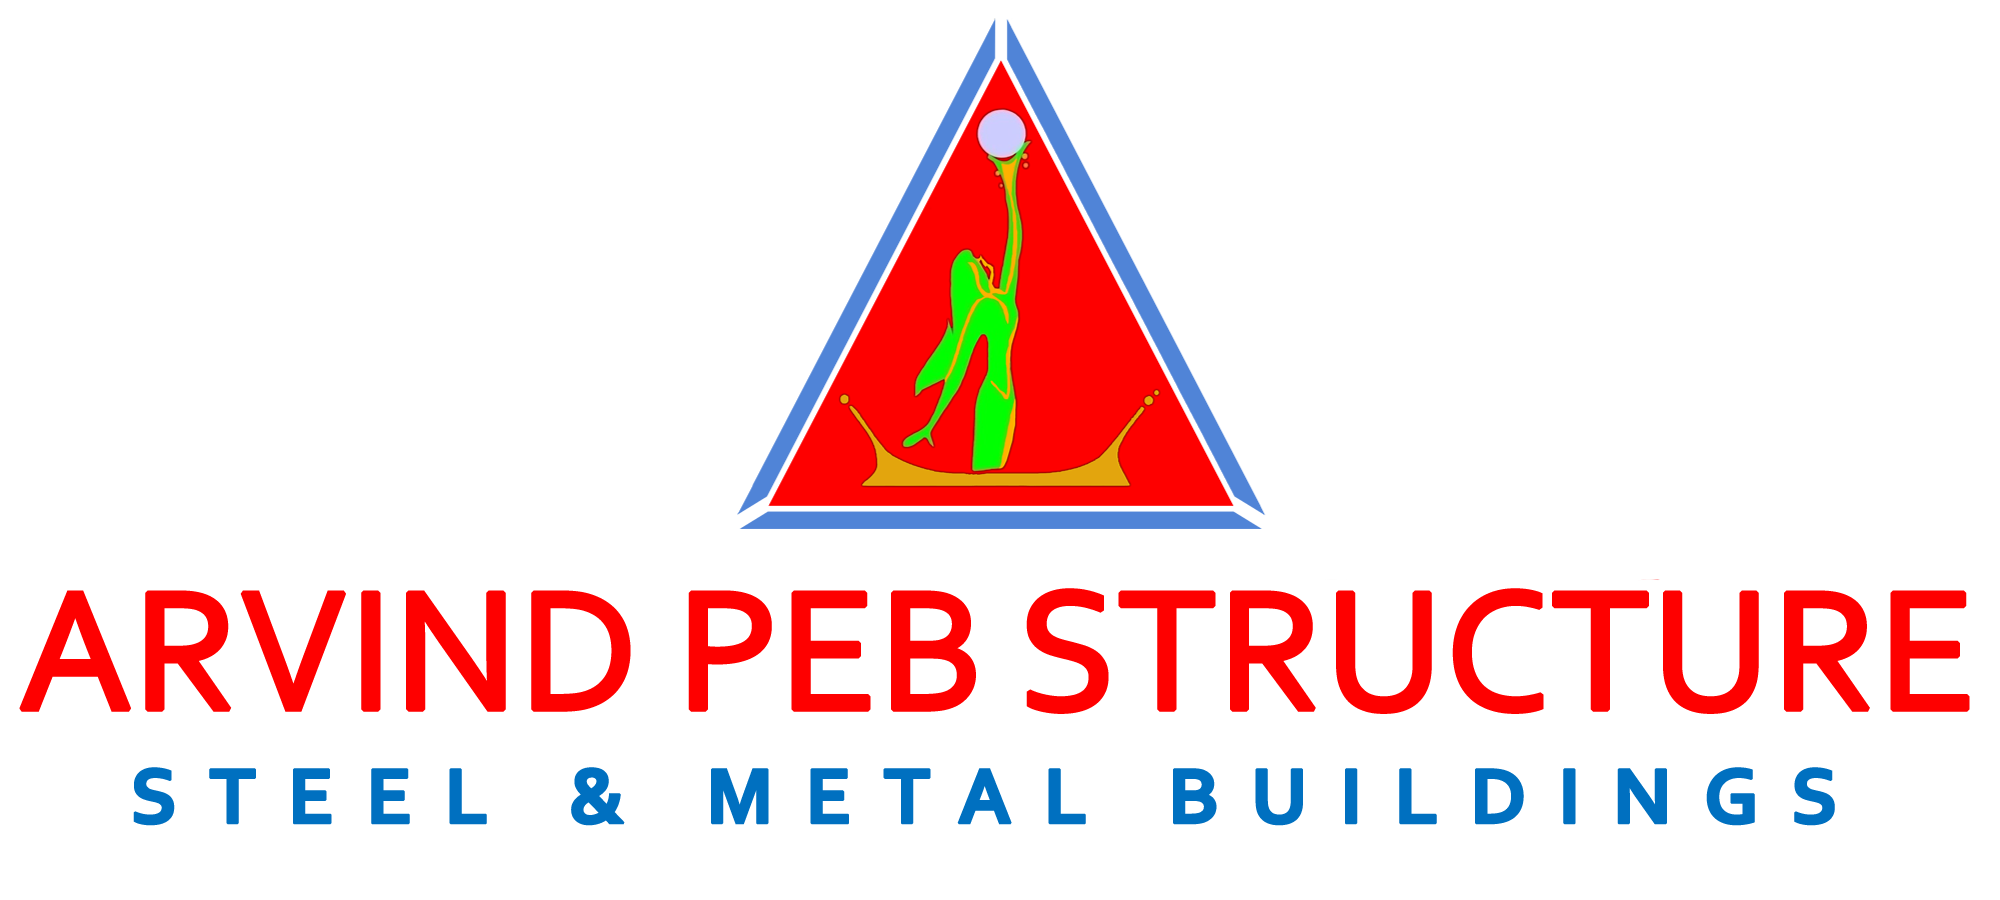 Peb steel structure